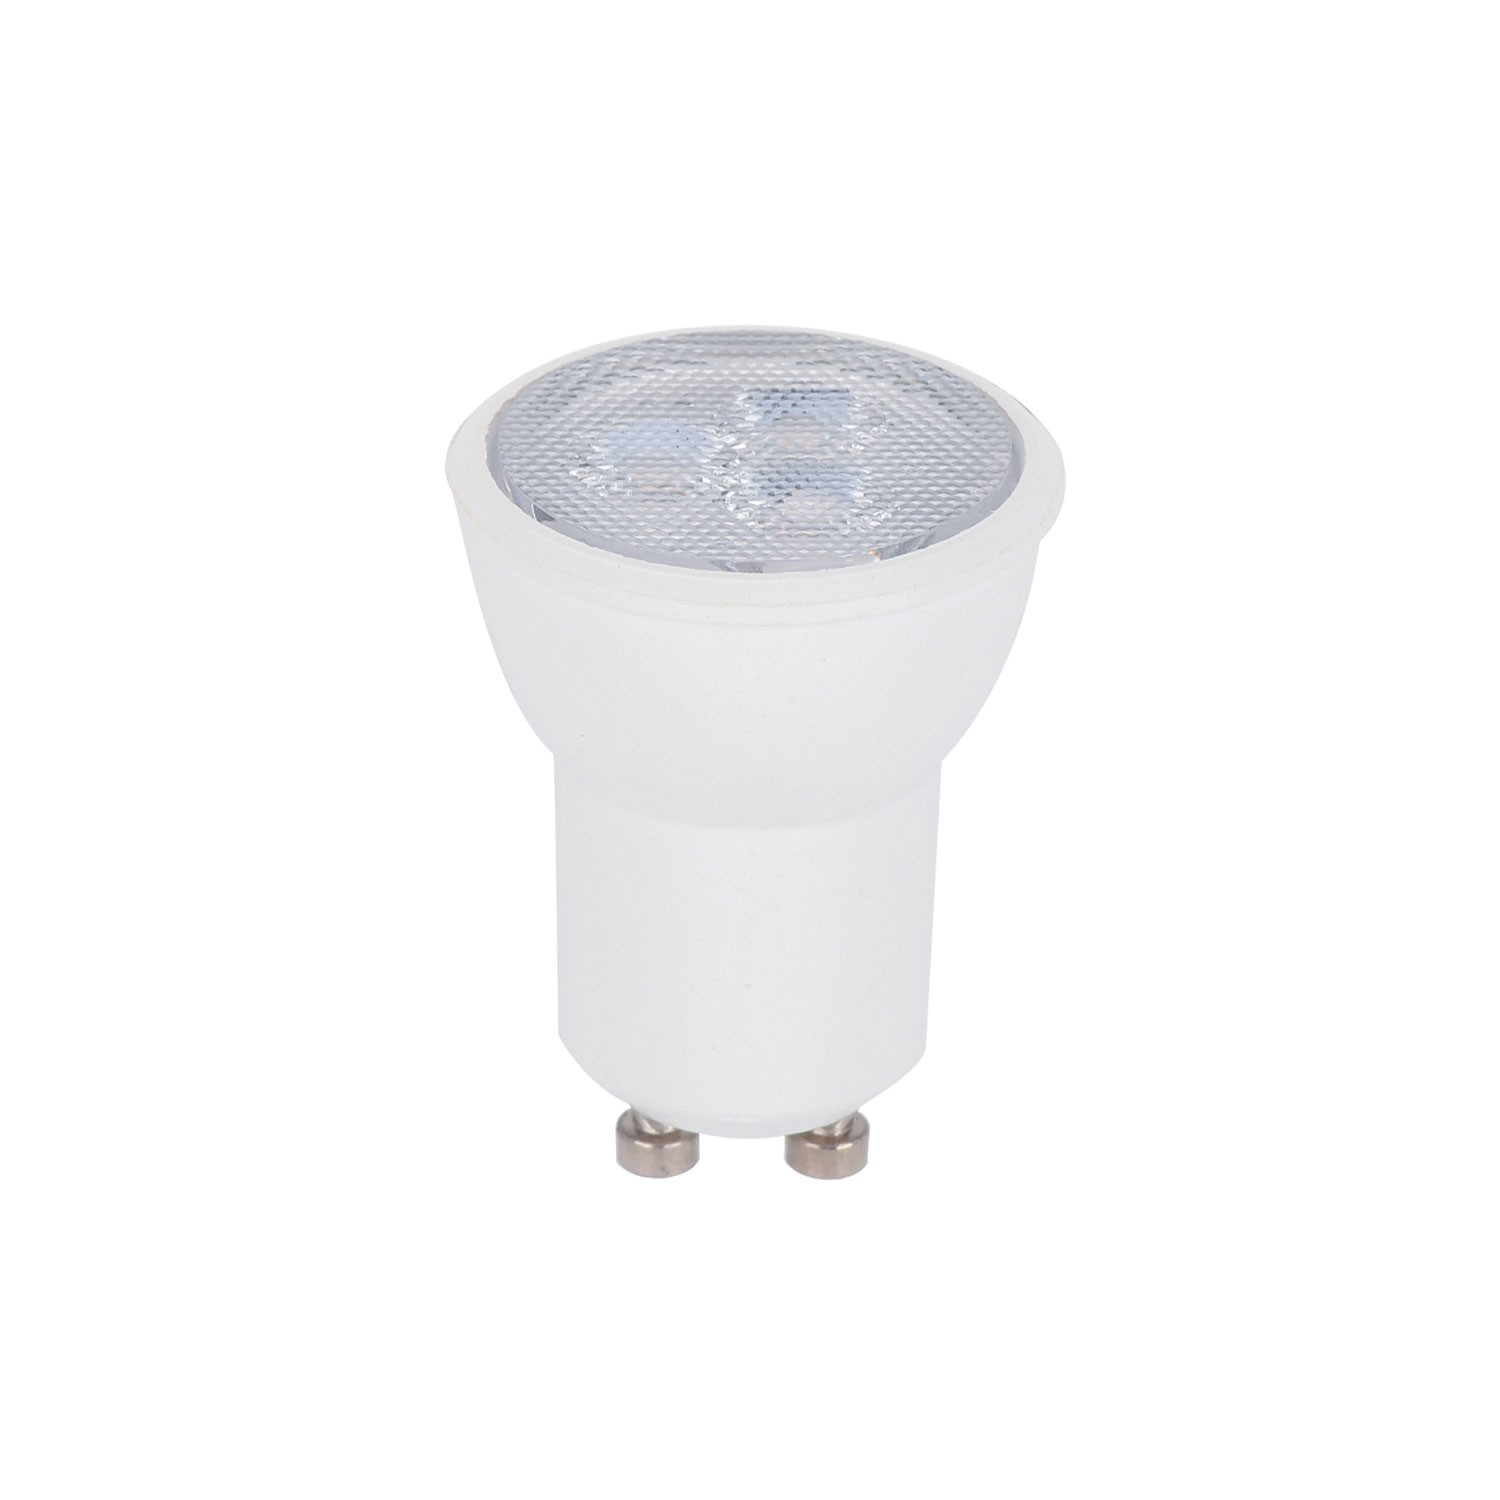 Fermaluce Flex 30 bodové svietidlo s mini rozetou s vypínačom a mini reflektorom GU1d0